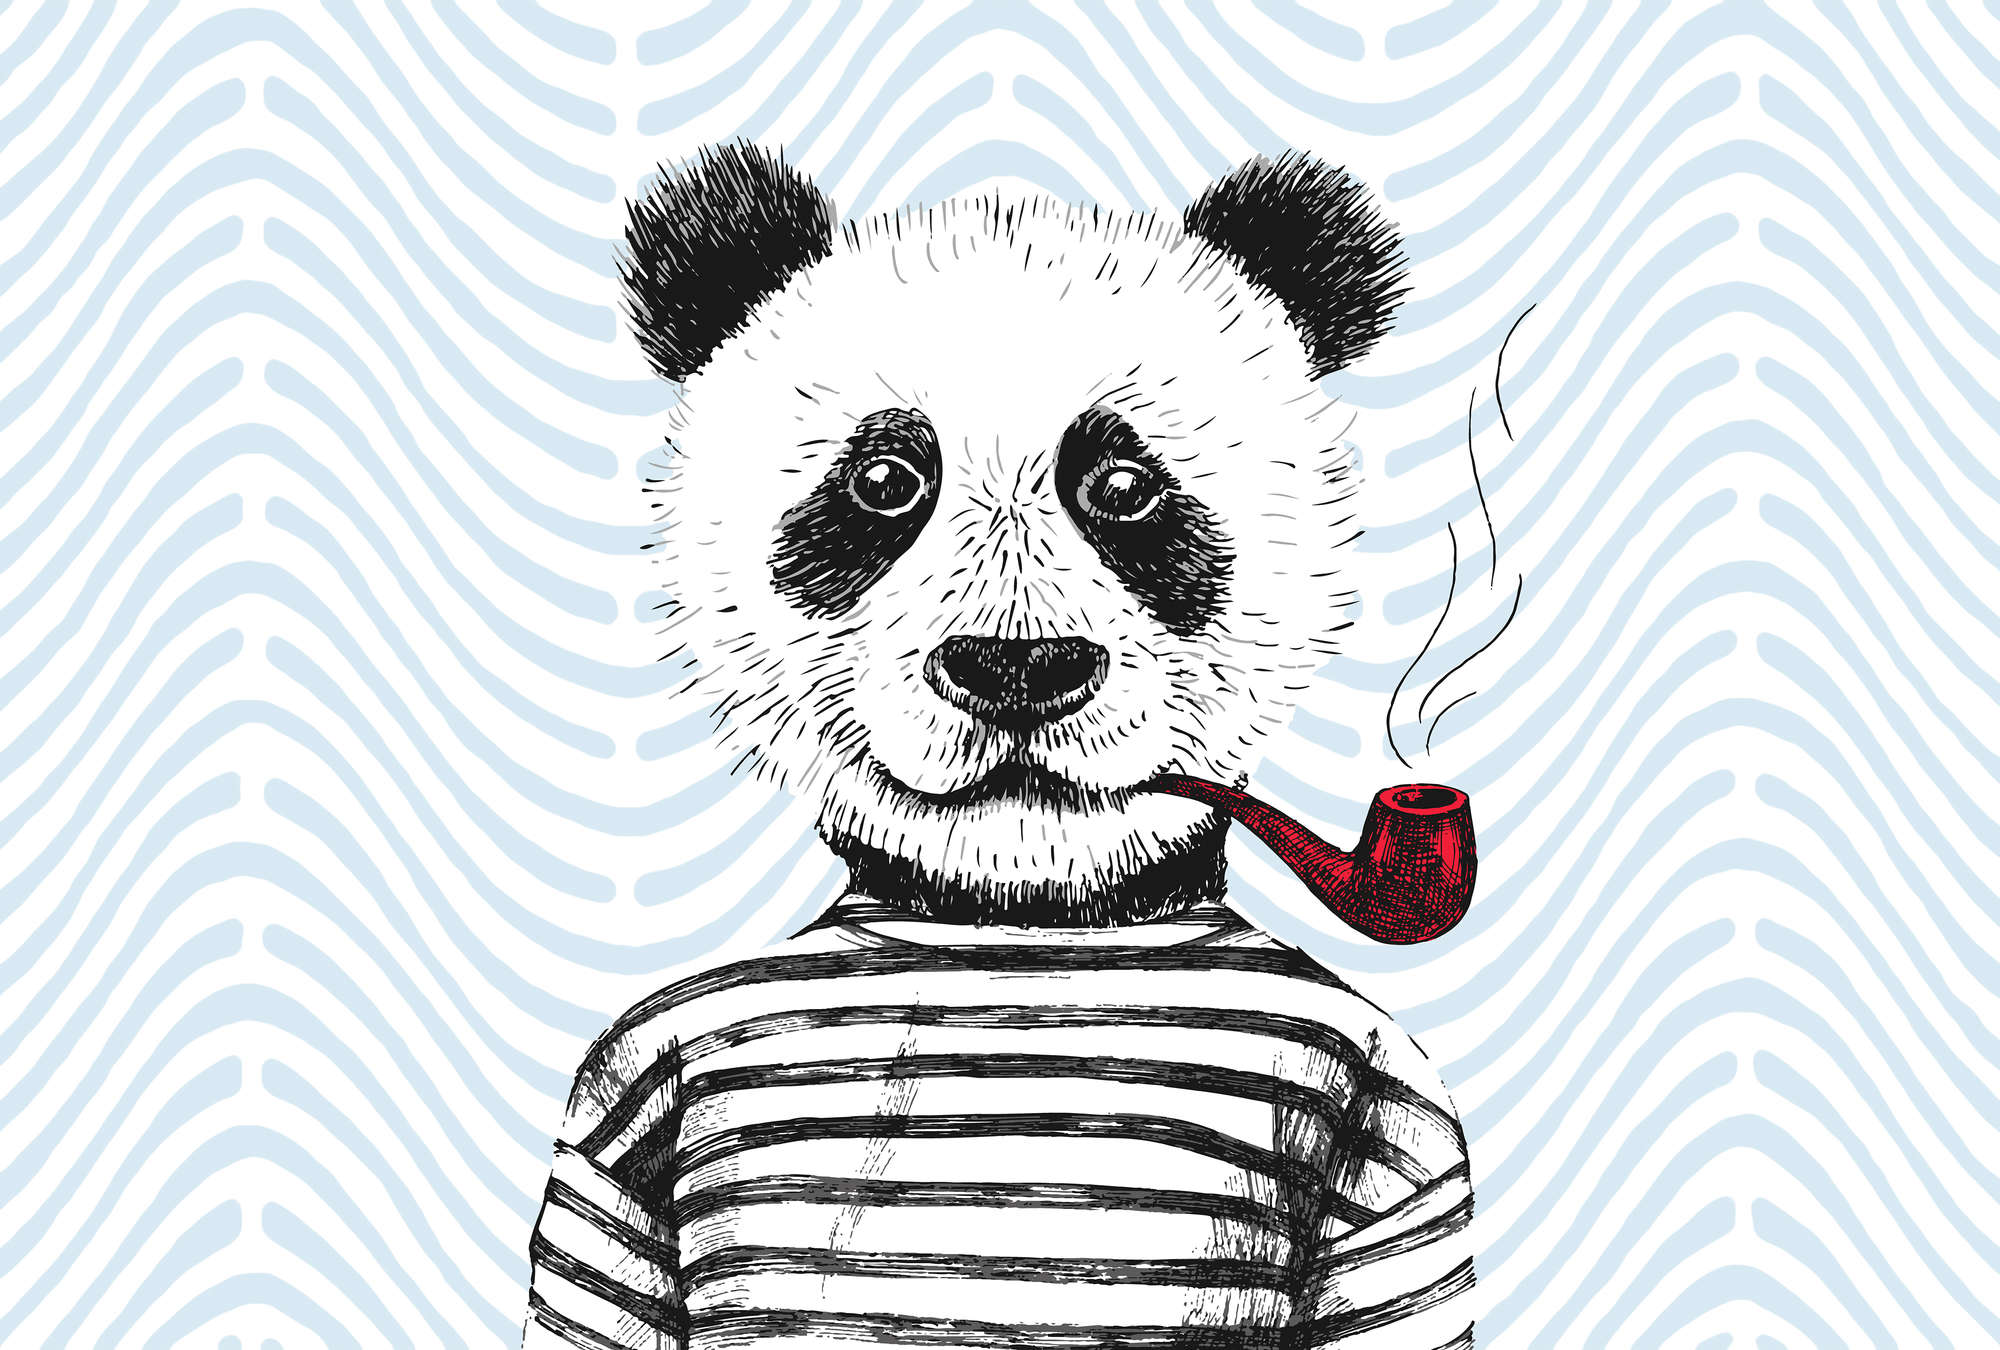             Fototapete Comic-Design für Kinderzimmer Panda-Motiv – Blau, Rot, Weiß
        